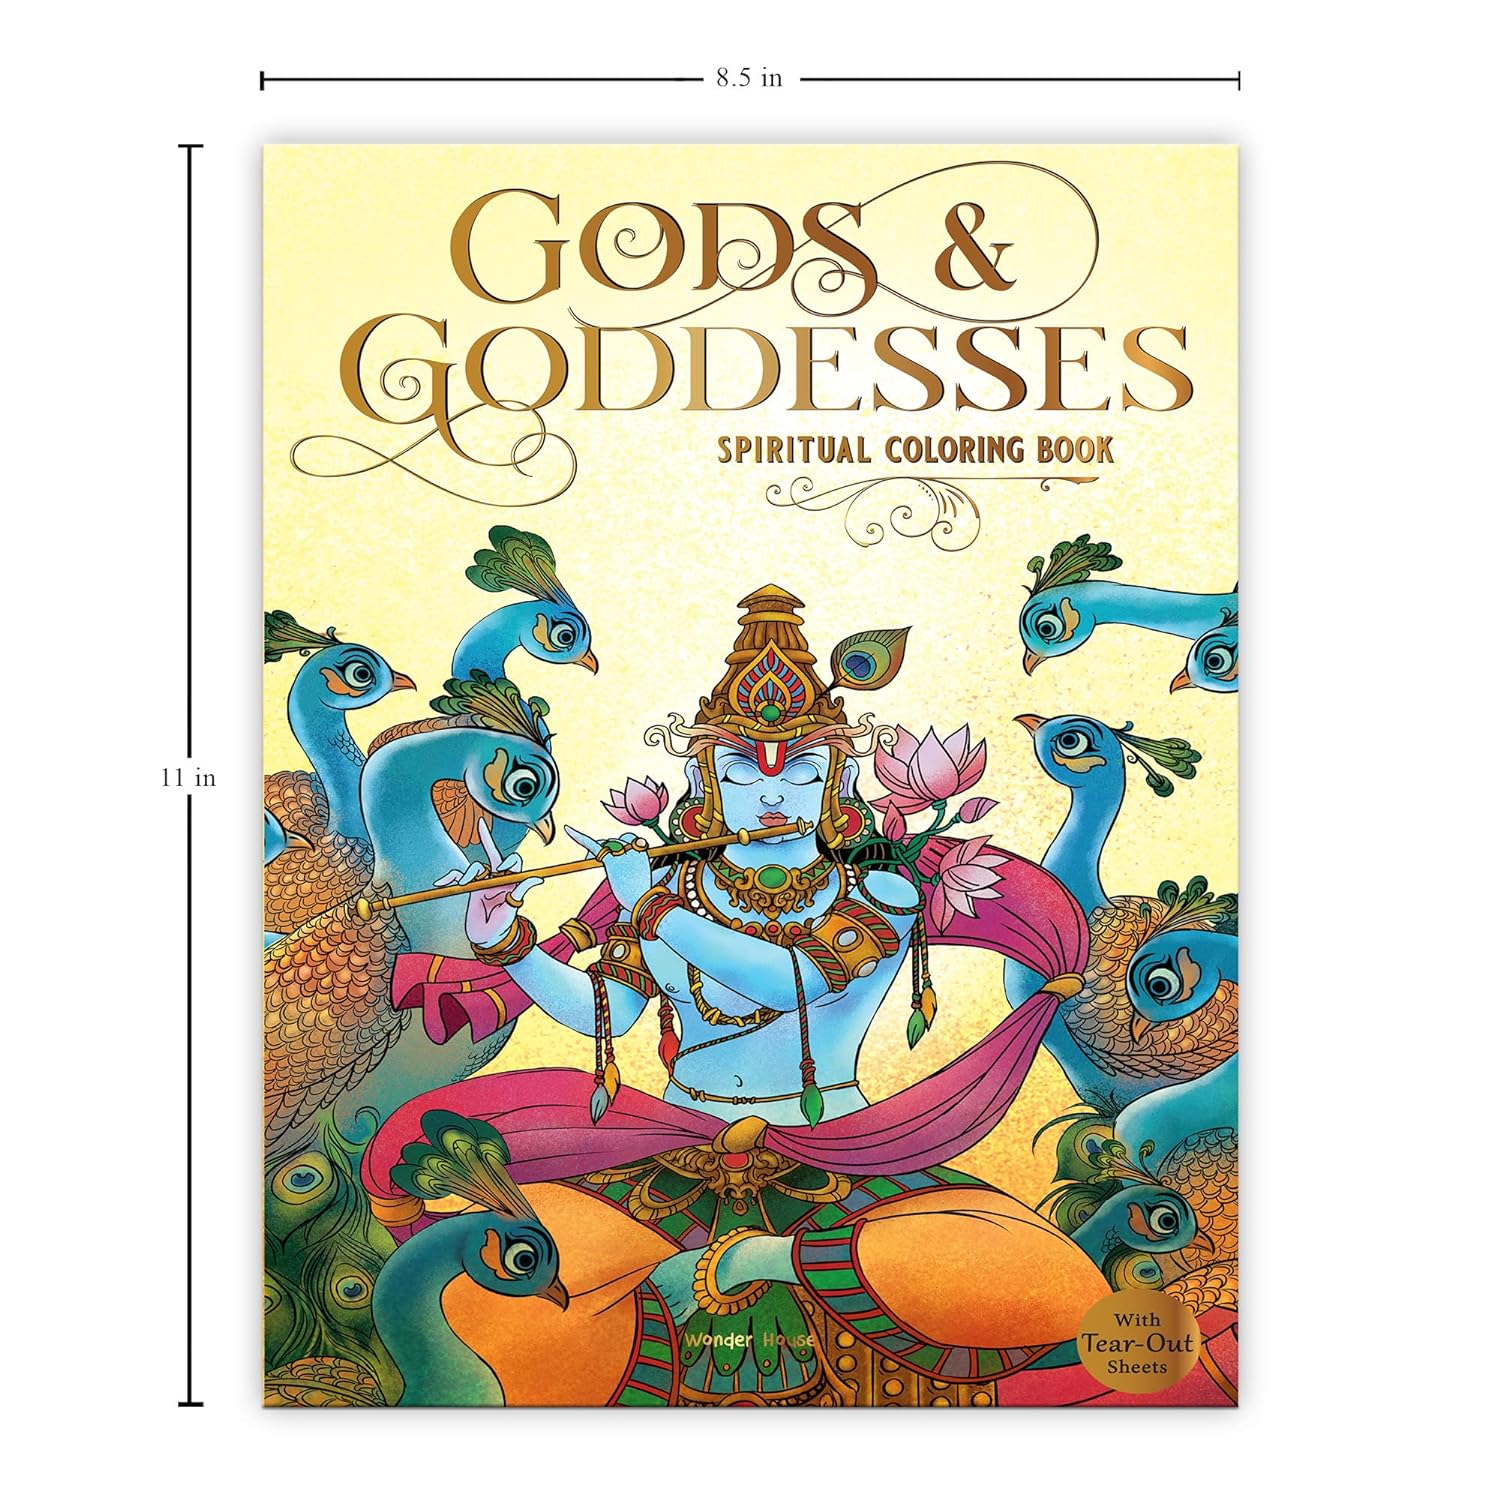 Gods & Goddesses Spiritual Coloring Book